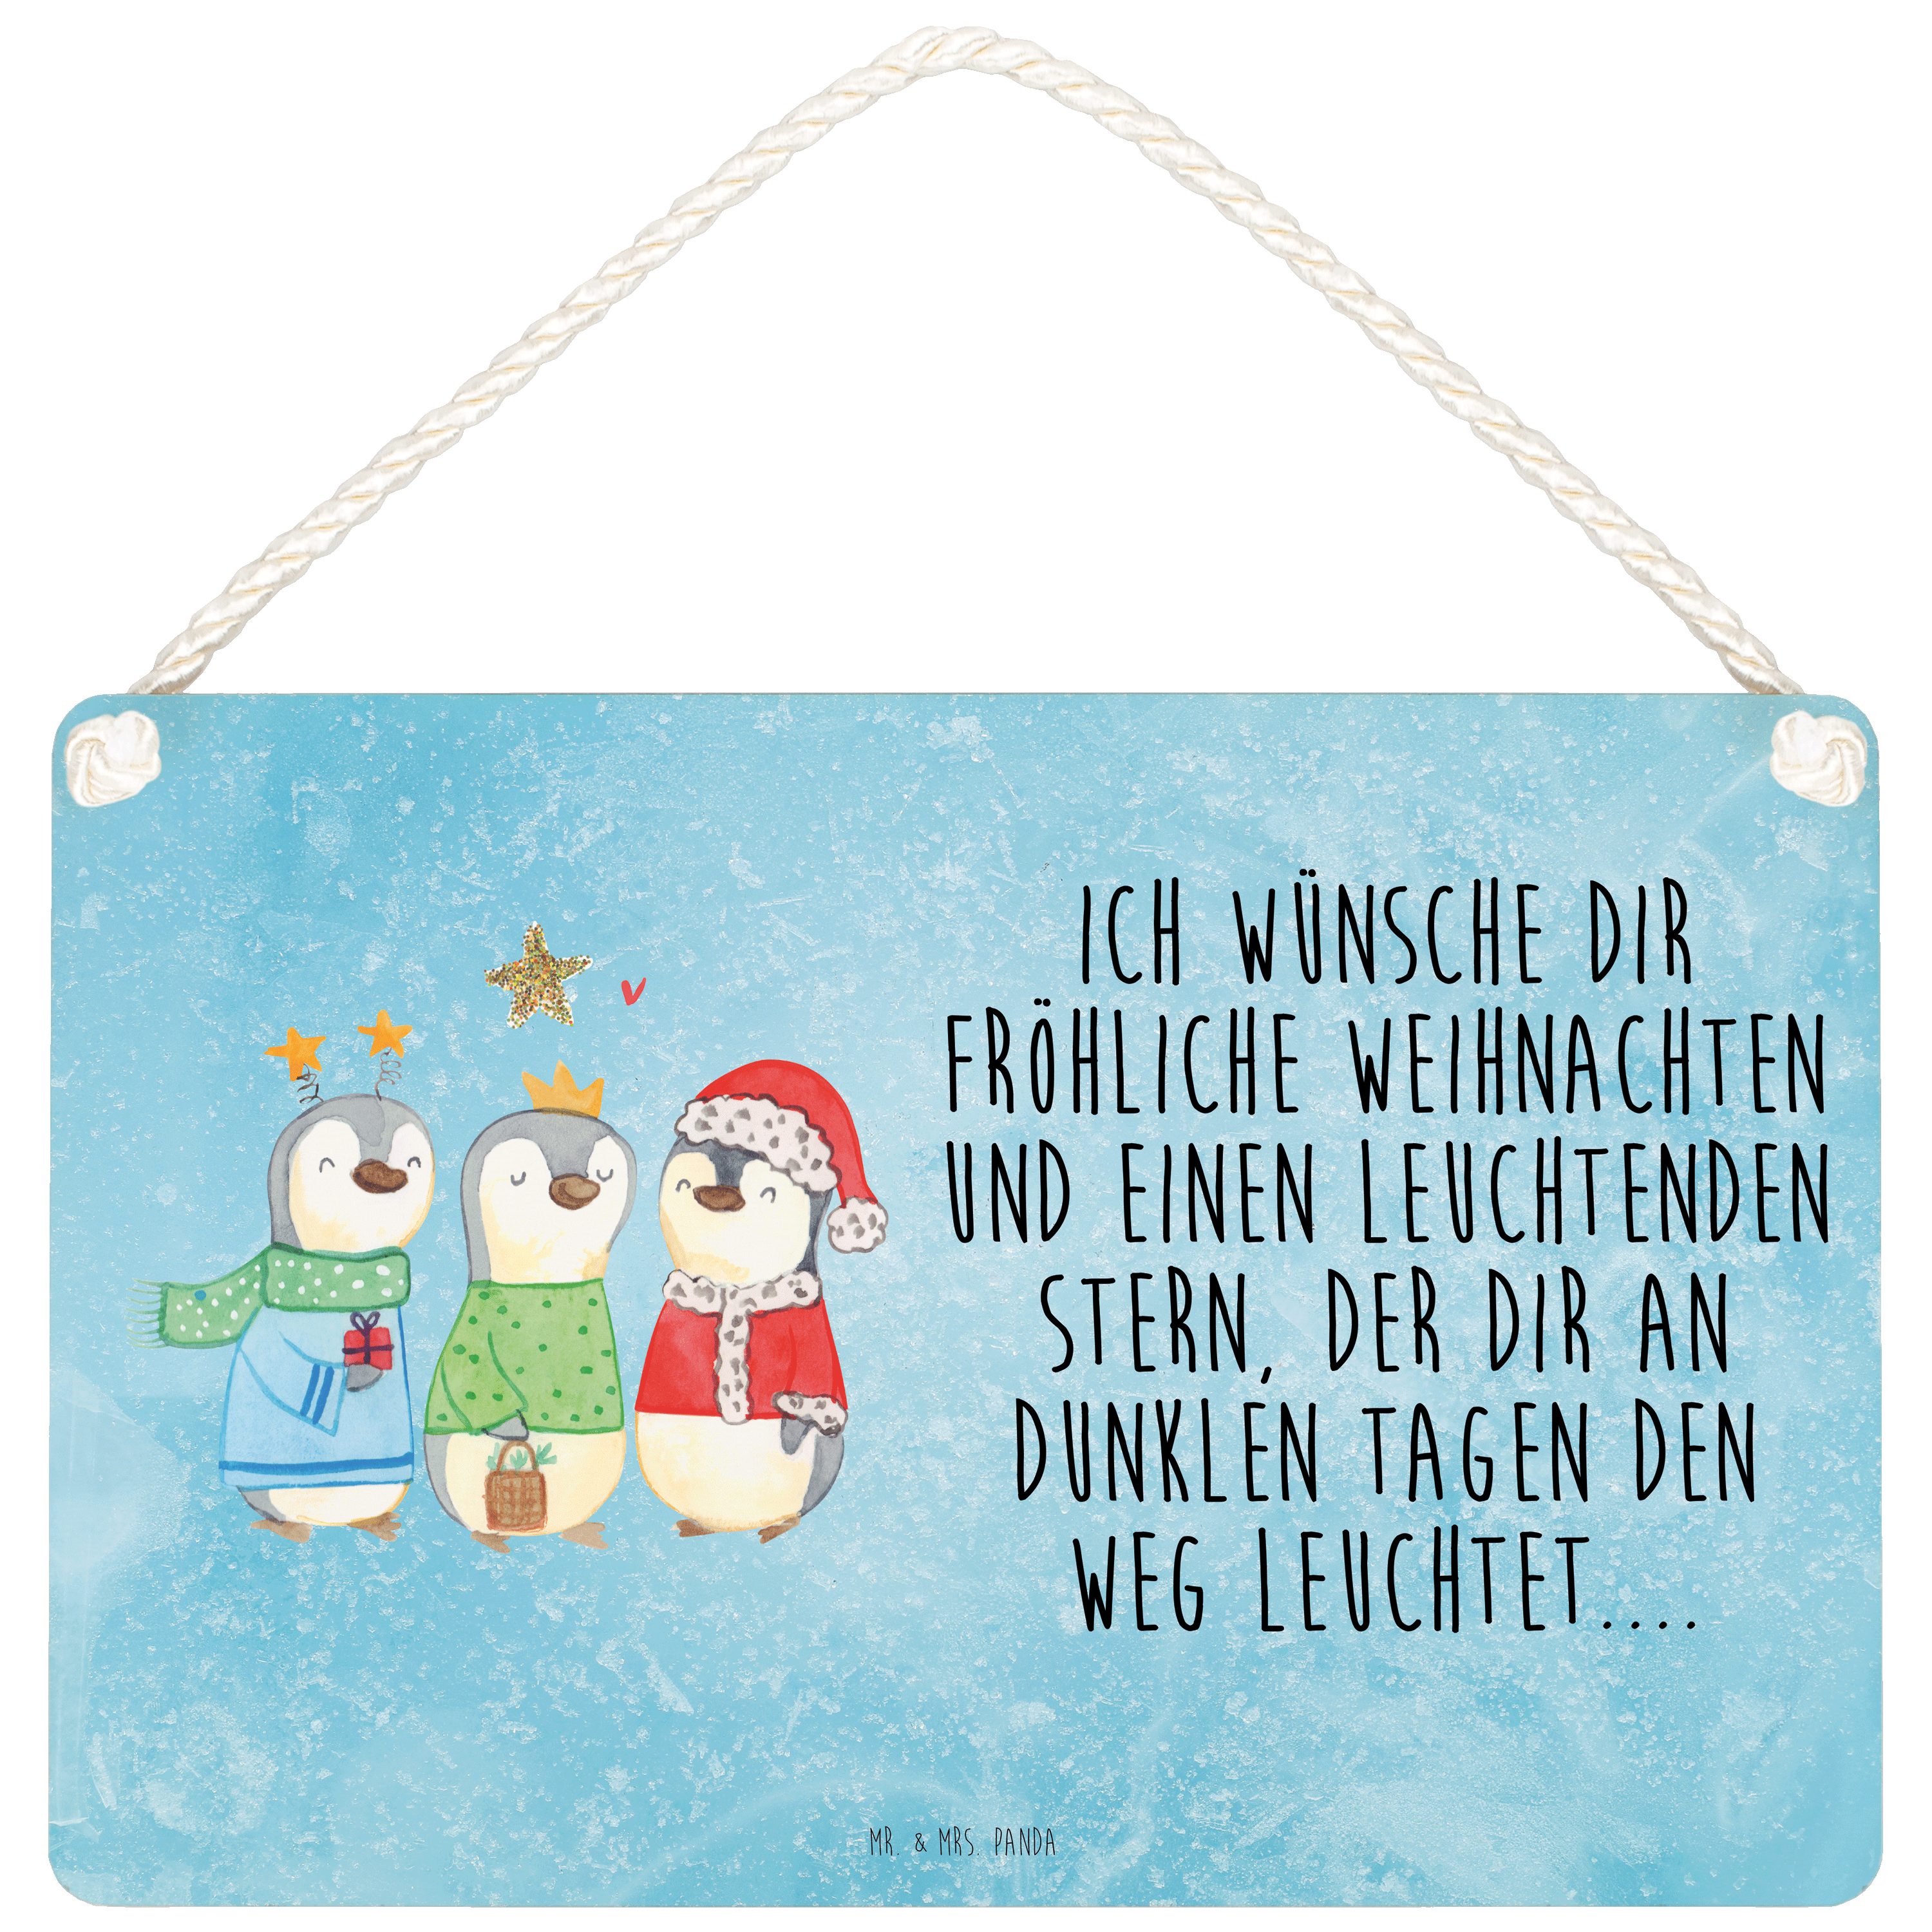 Mr. & Mrs. Panda Hinweisschild DIN A6 Winterzeit Heilige drei Könige -  Eisblau - Geschenk, Weihnacht, (1 St), Farbecht